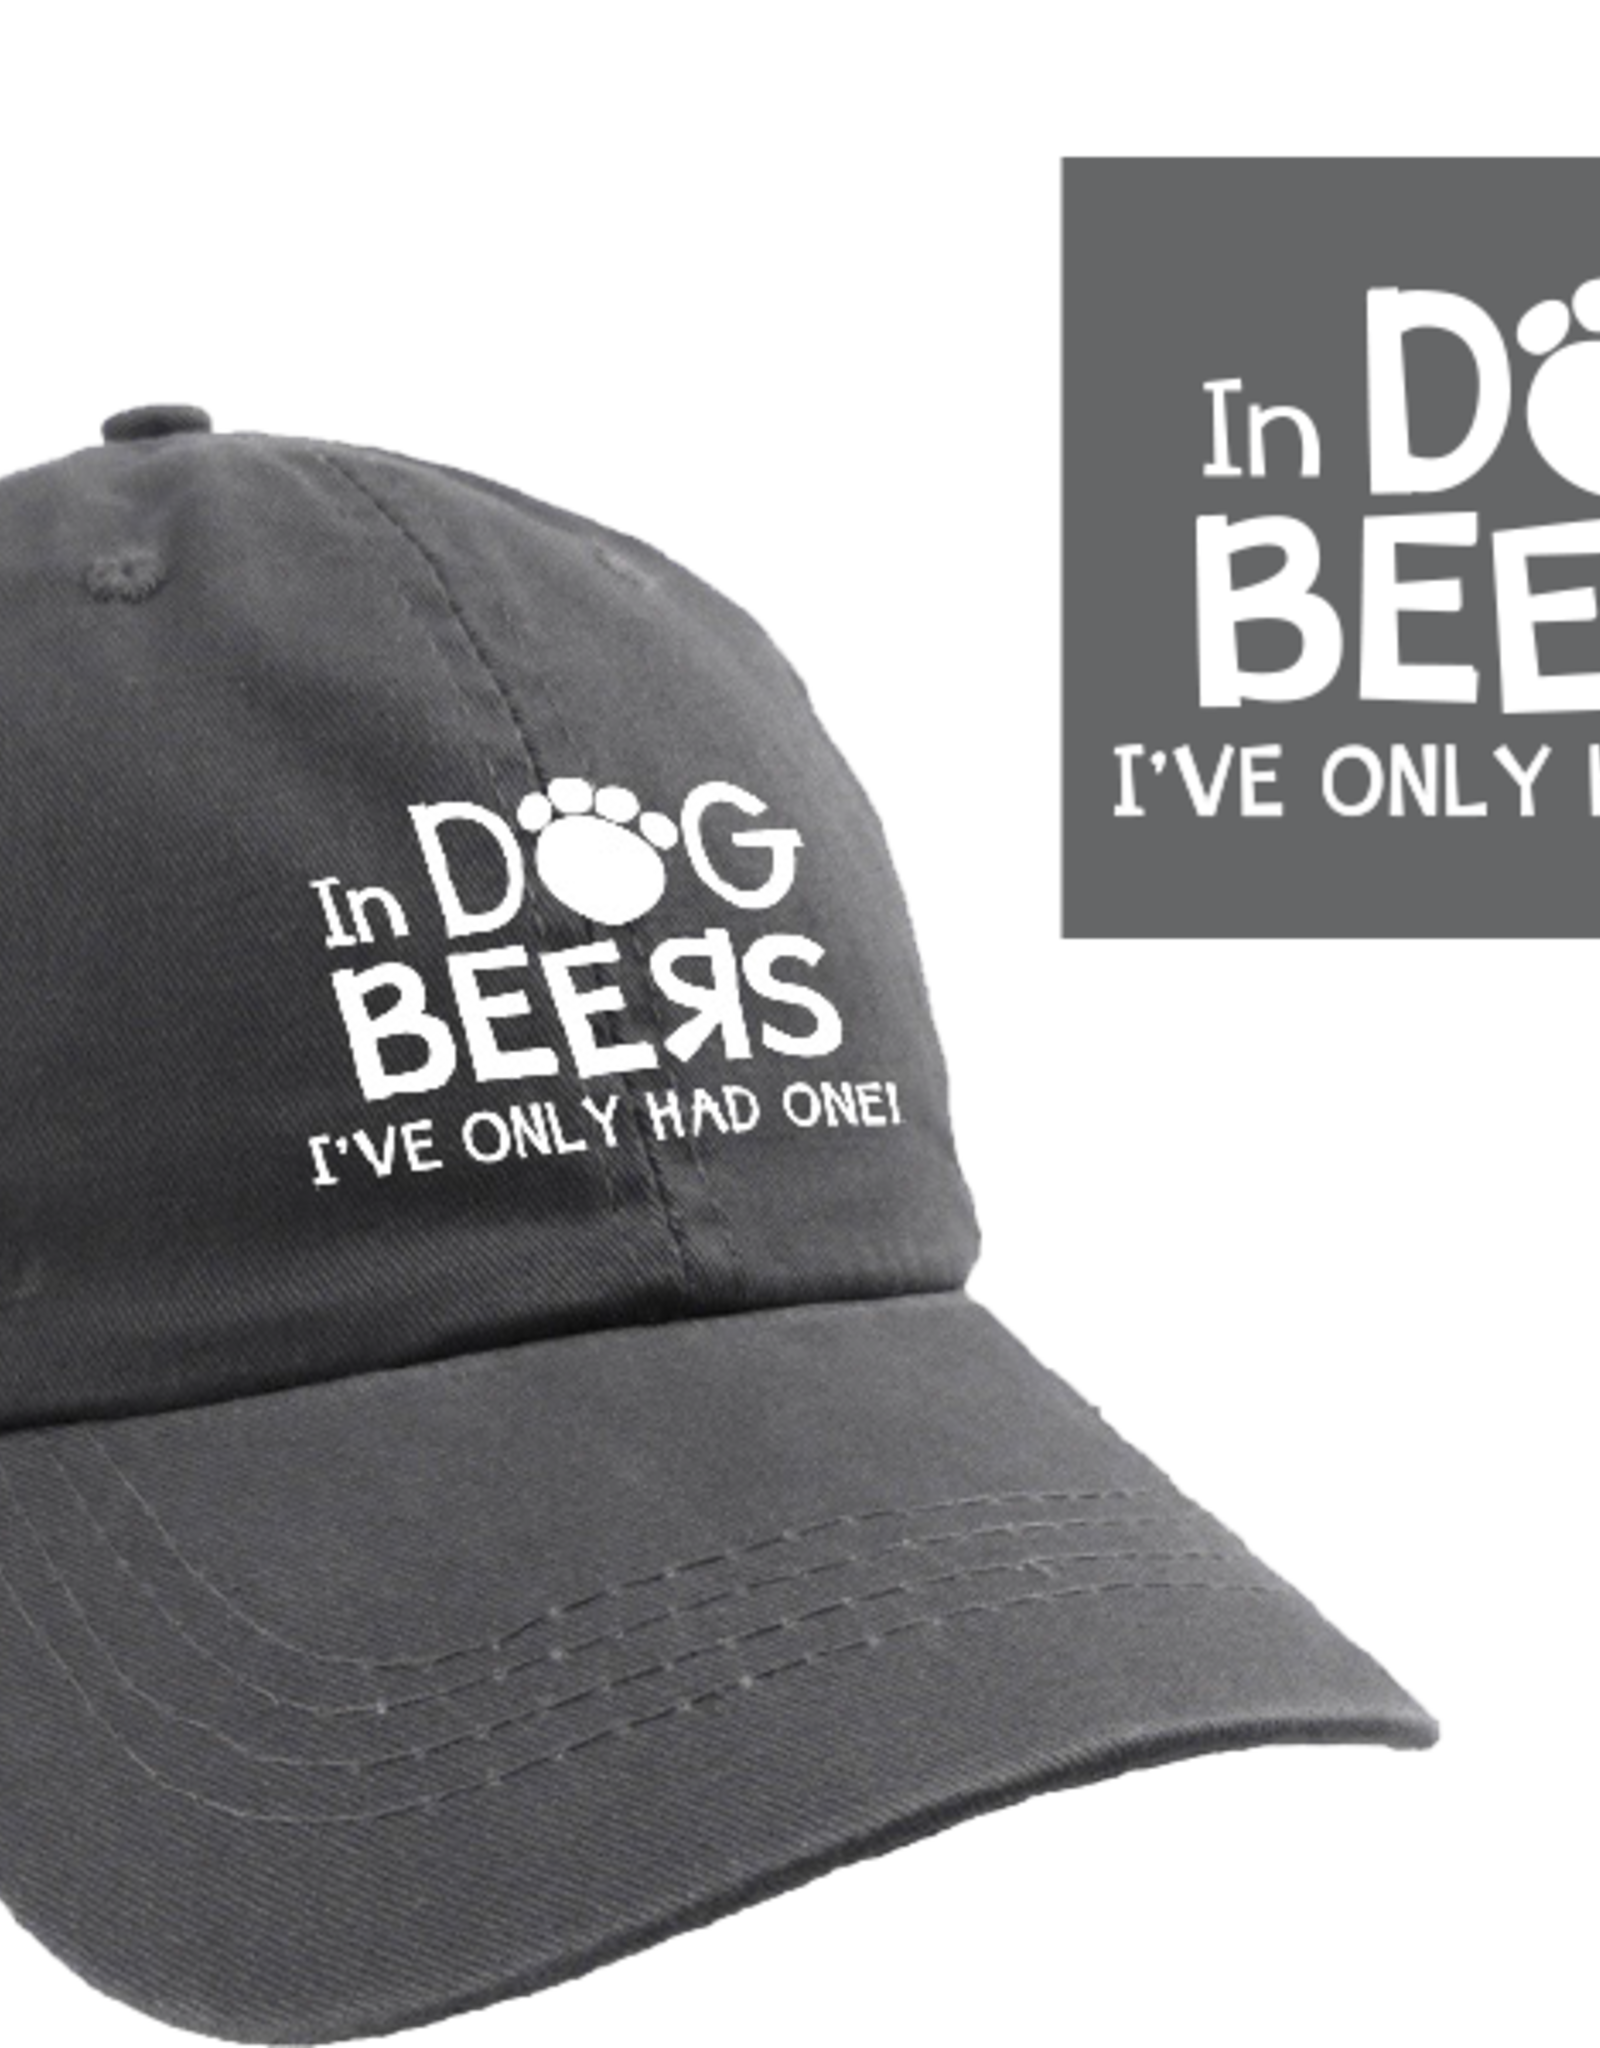 Dog Speak Ball Cap - In Dog Beers